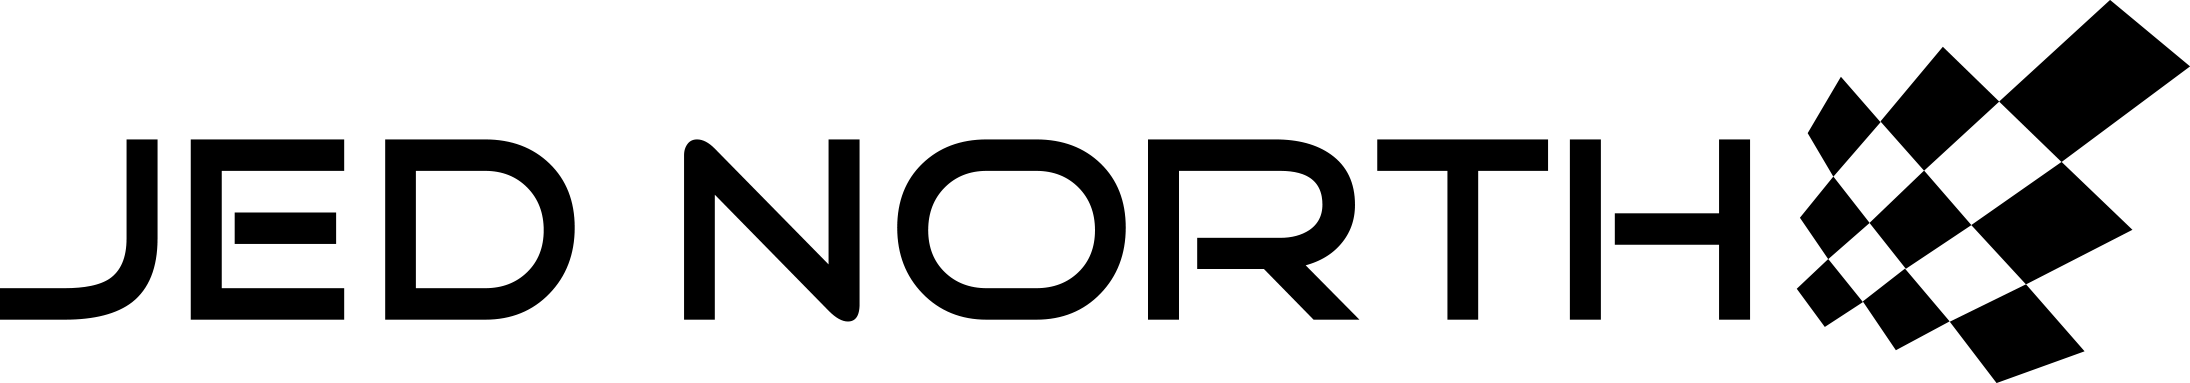 File:TheNorthFace logo.svg - Wikipedia